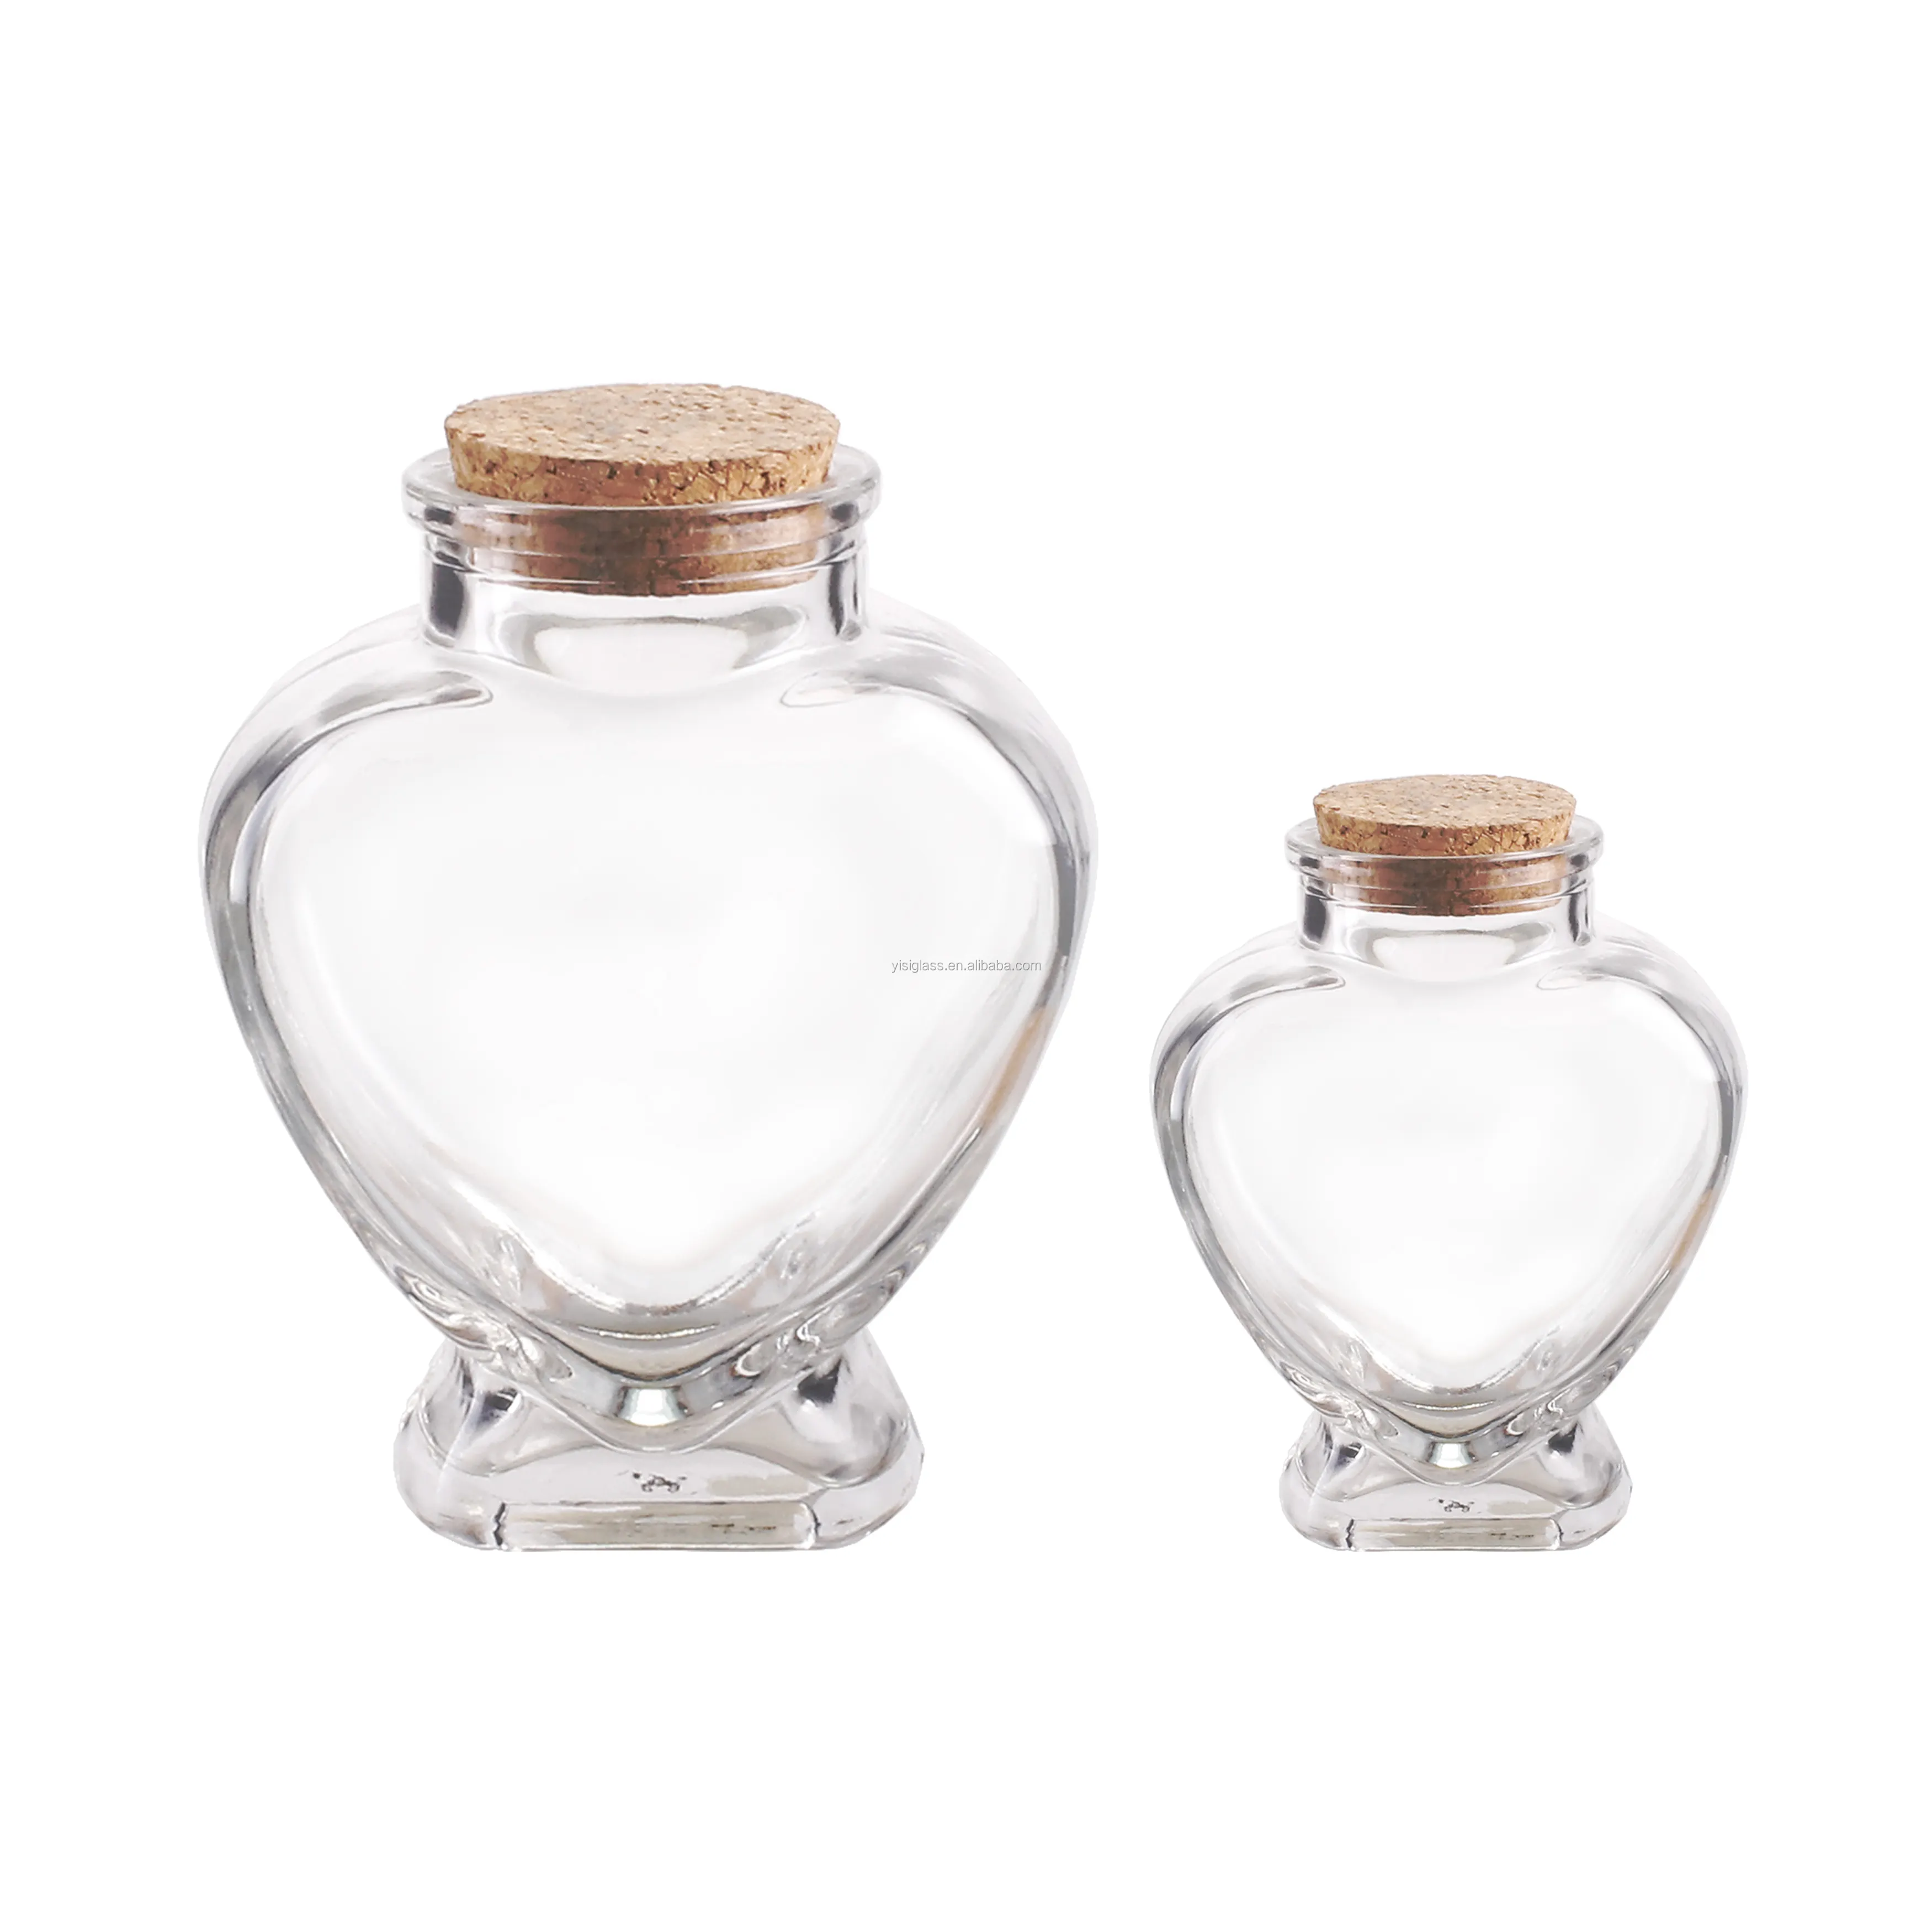 Botella de cristal con forma de corazón para decoración de boda, frasco de cristal con forma de corazón, 50Ml